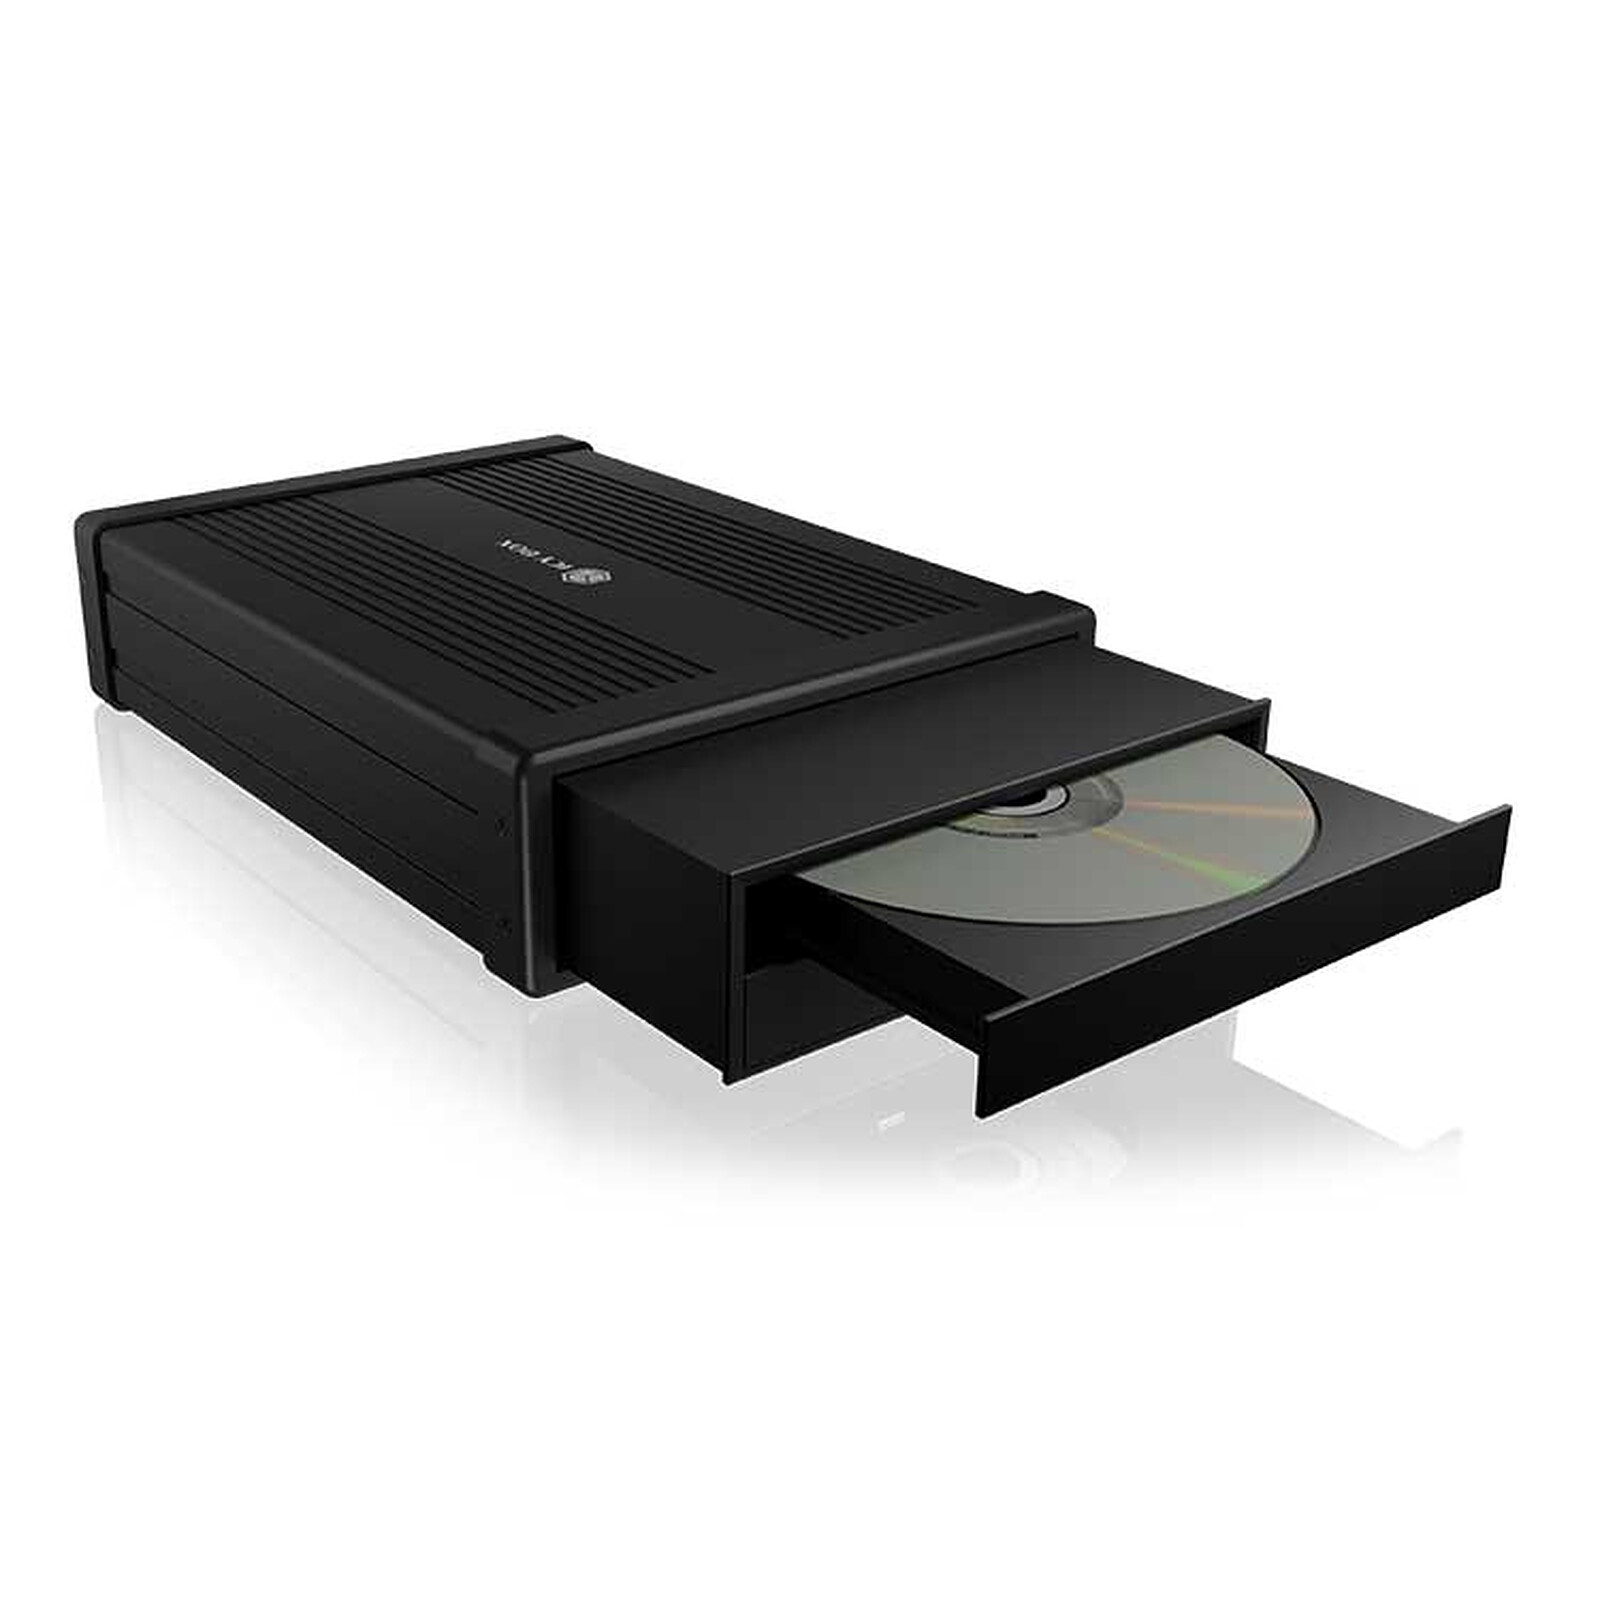 ICY BOX IB-525-U3 - Hard drive enclosure - LDLC 3-year warranty